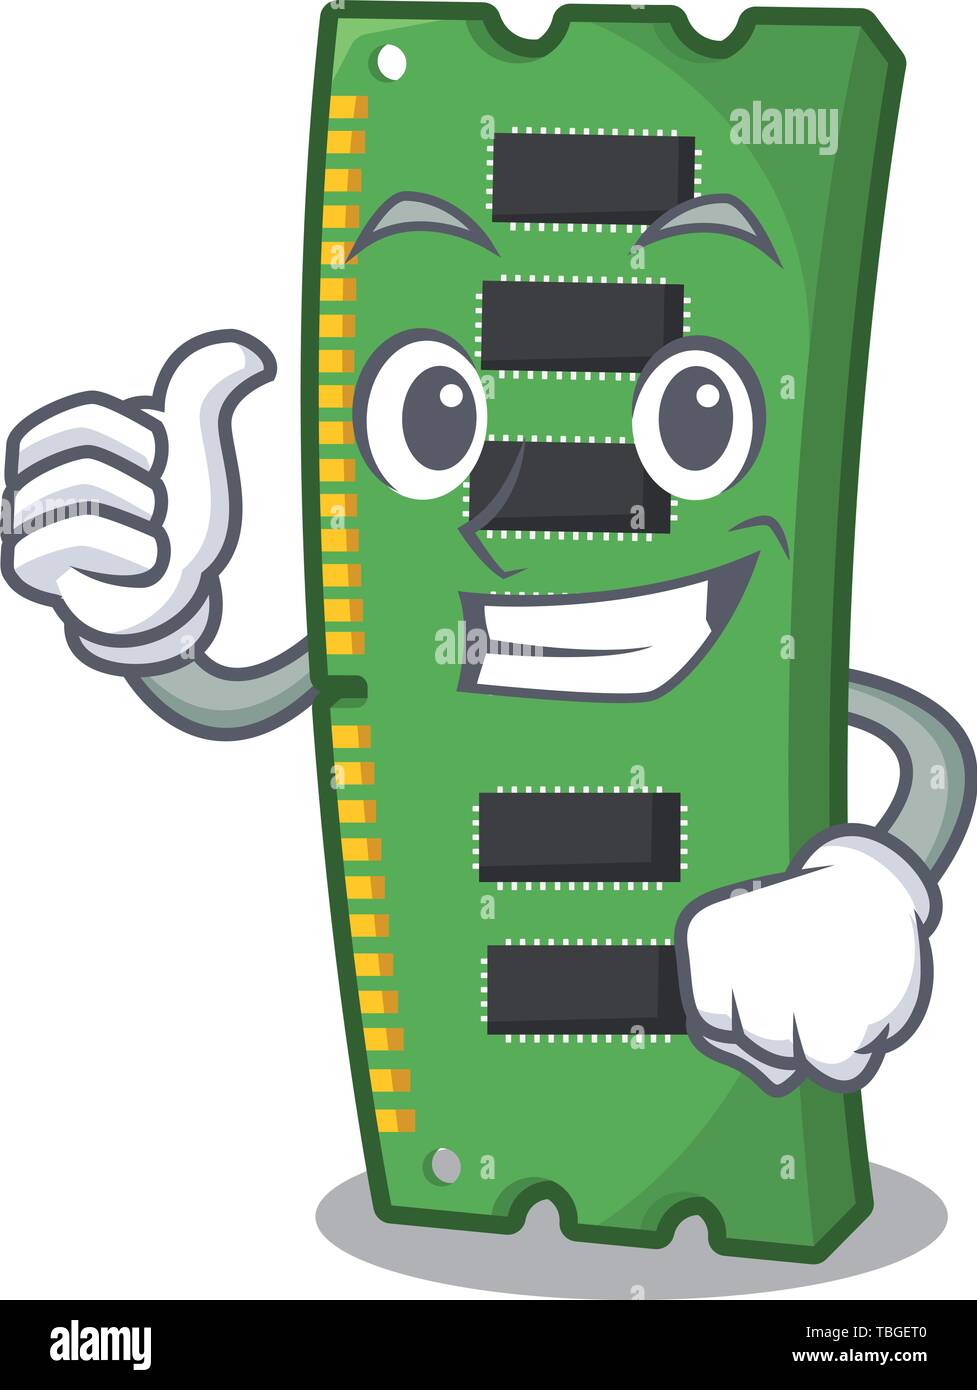 Thumbs up RAM memory card the mascot shape Stock Vector